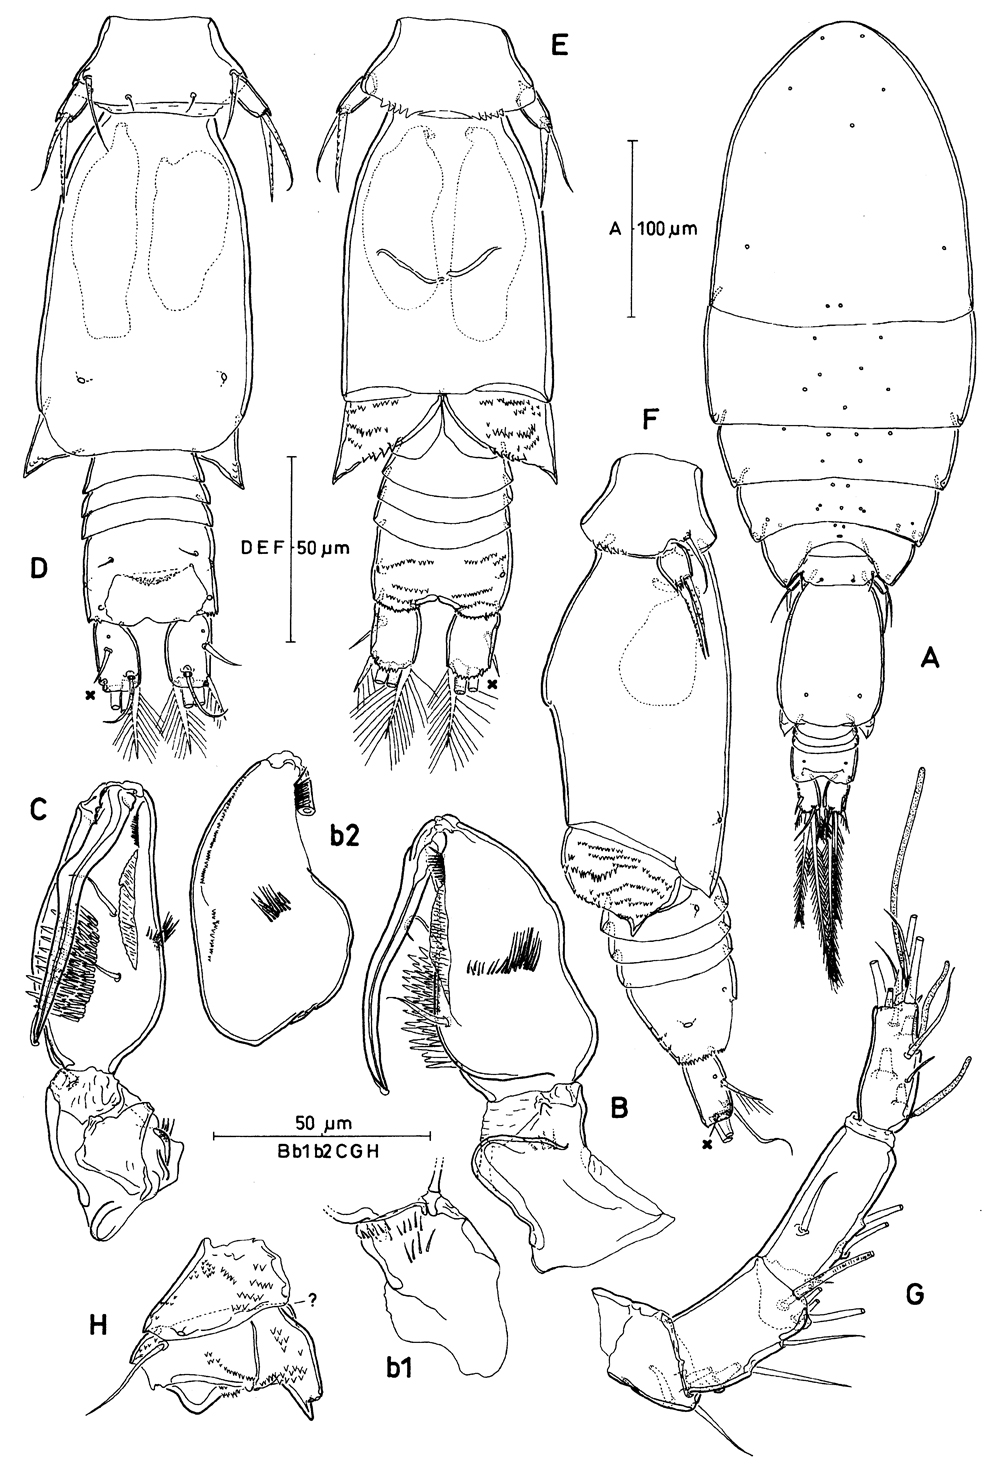 Species Oncaea serrulata - Plate 5 of morphological figures